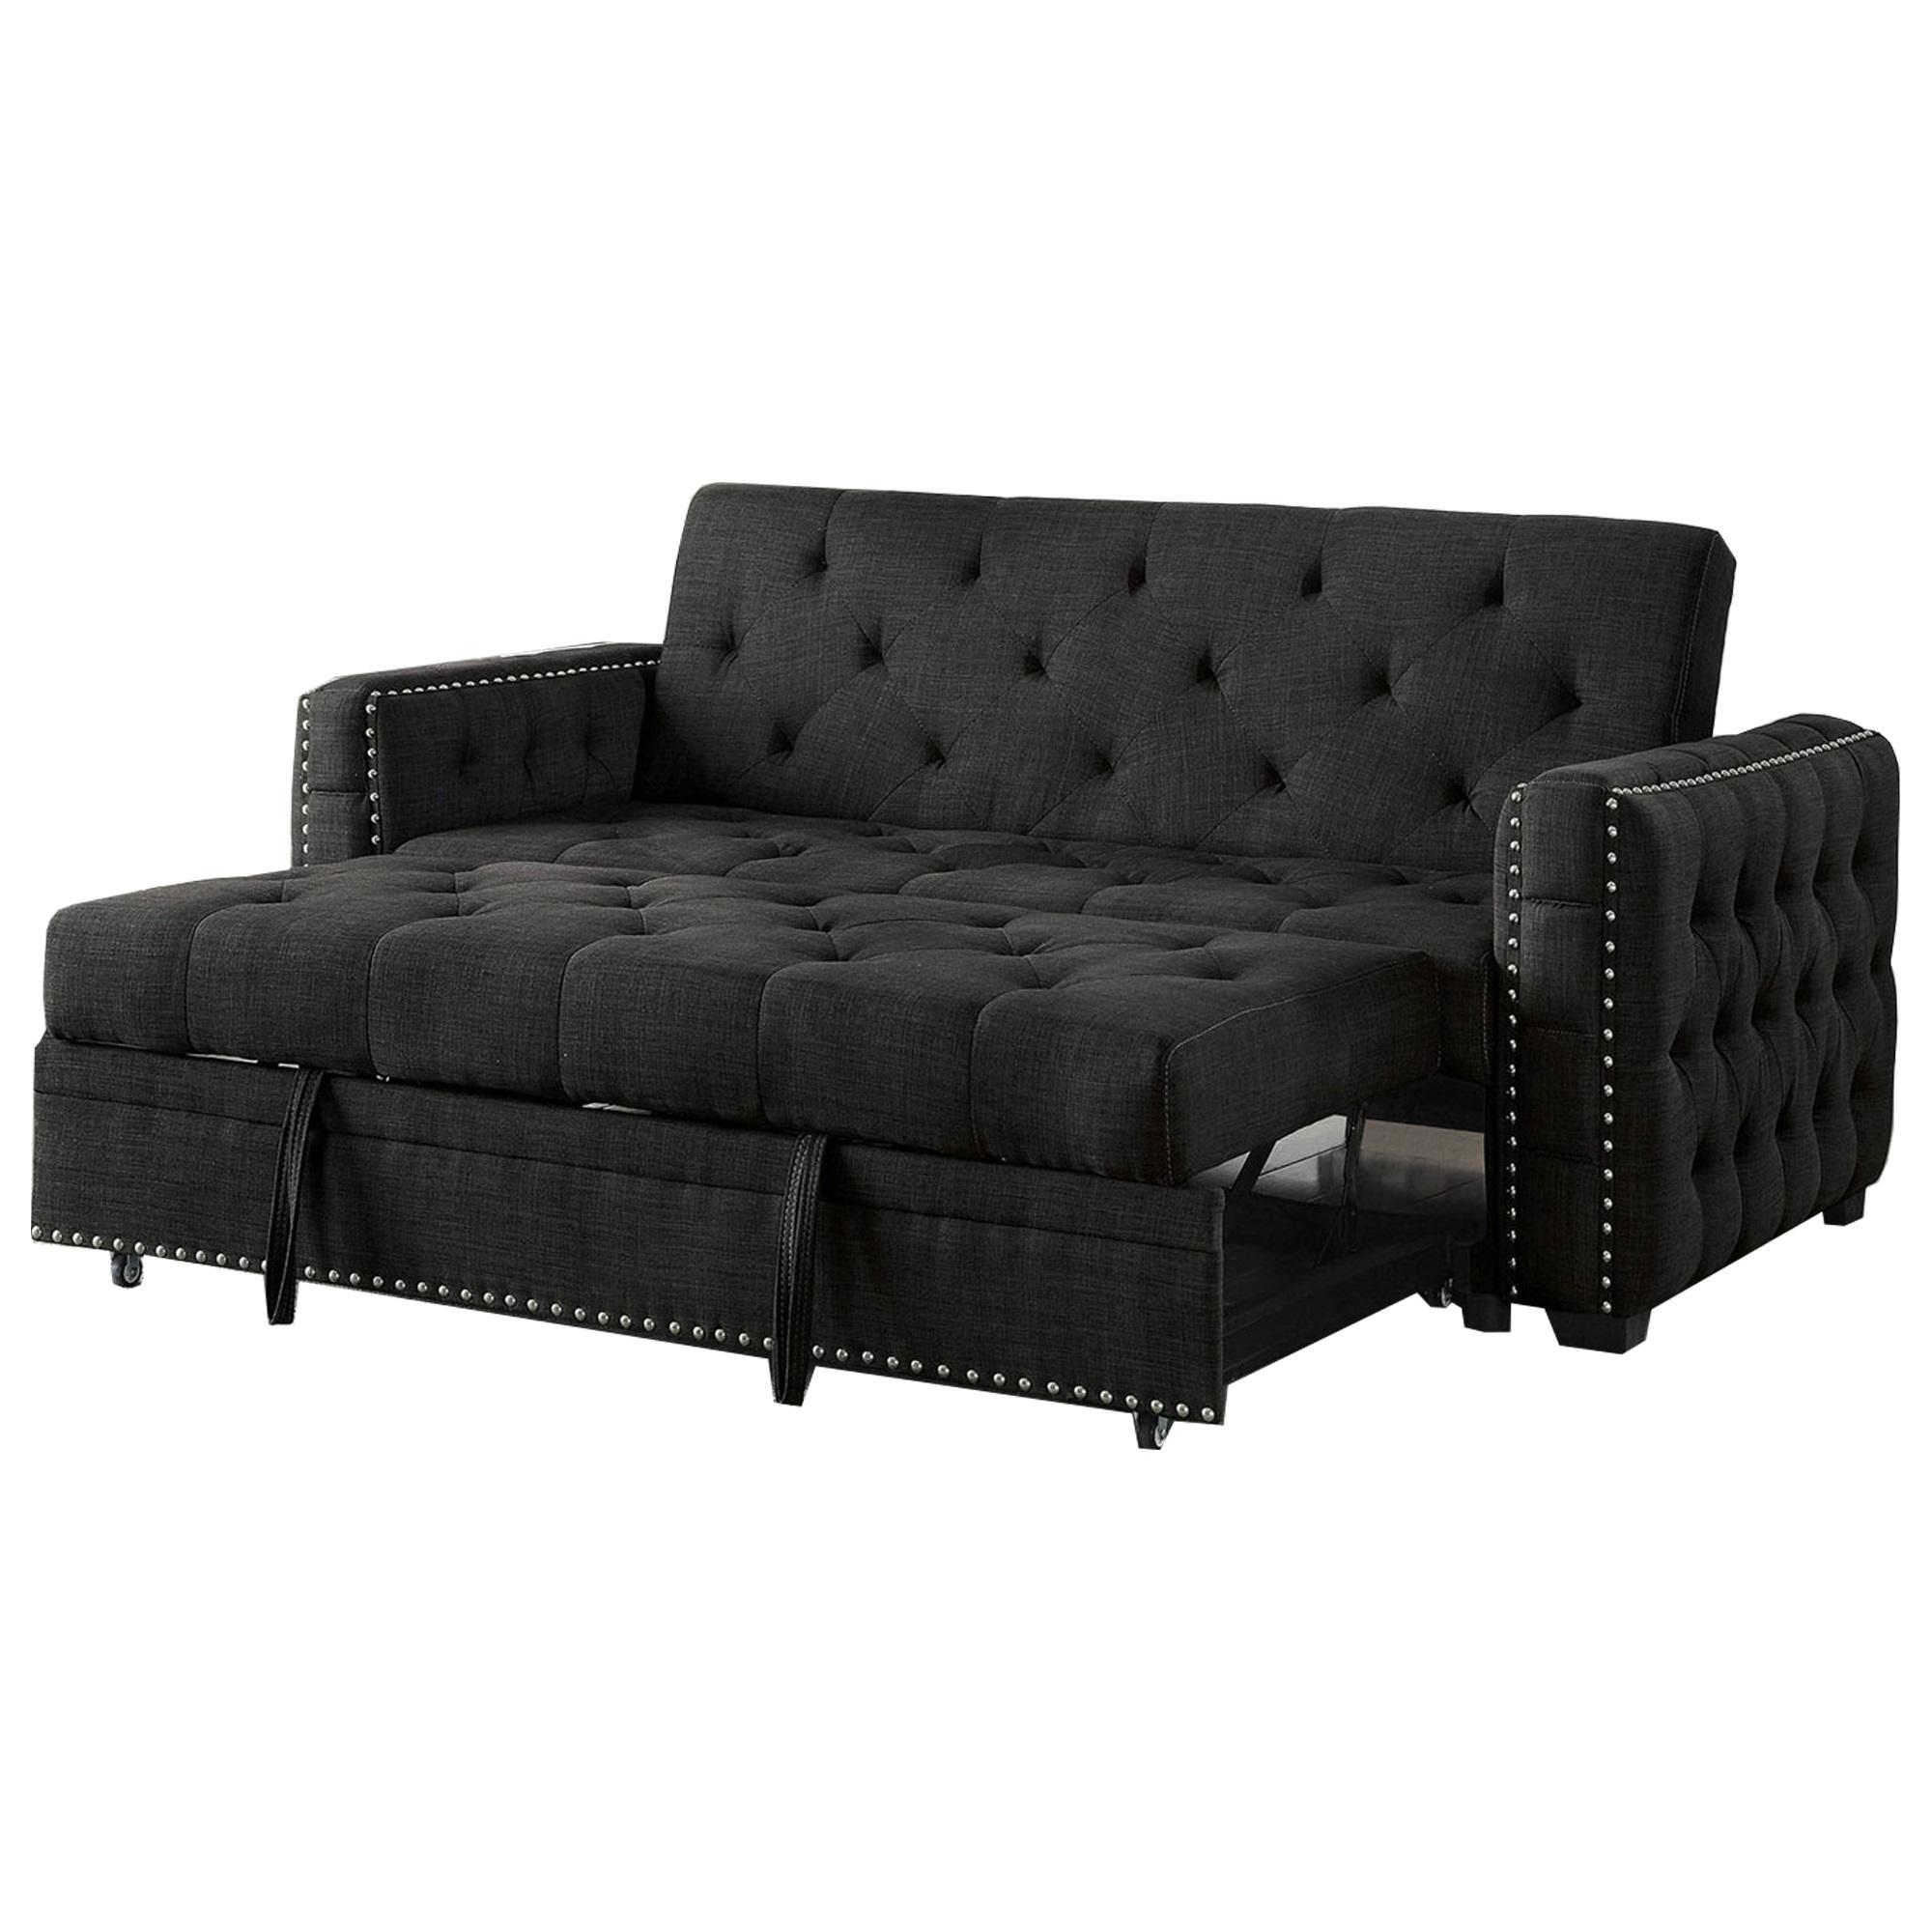 Furniture of America LEONORA CM2604 Futon sofa